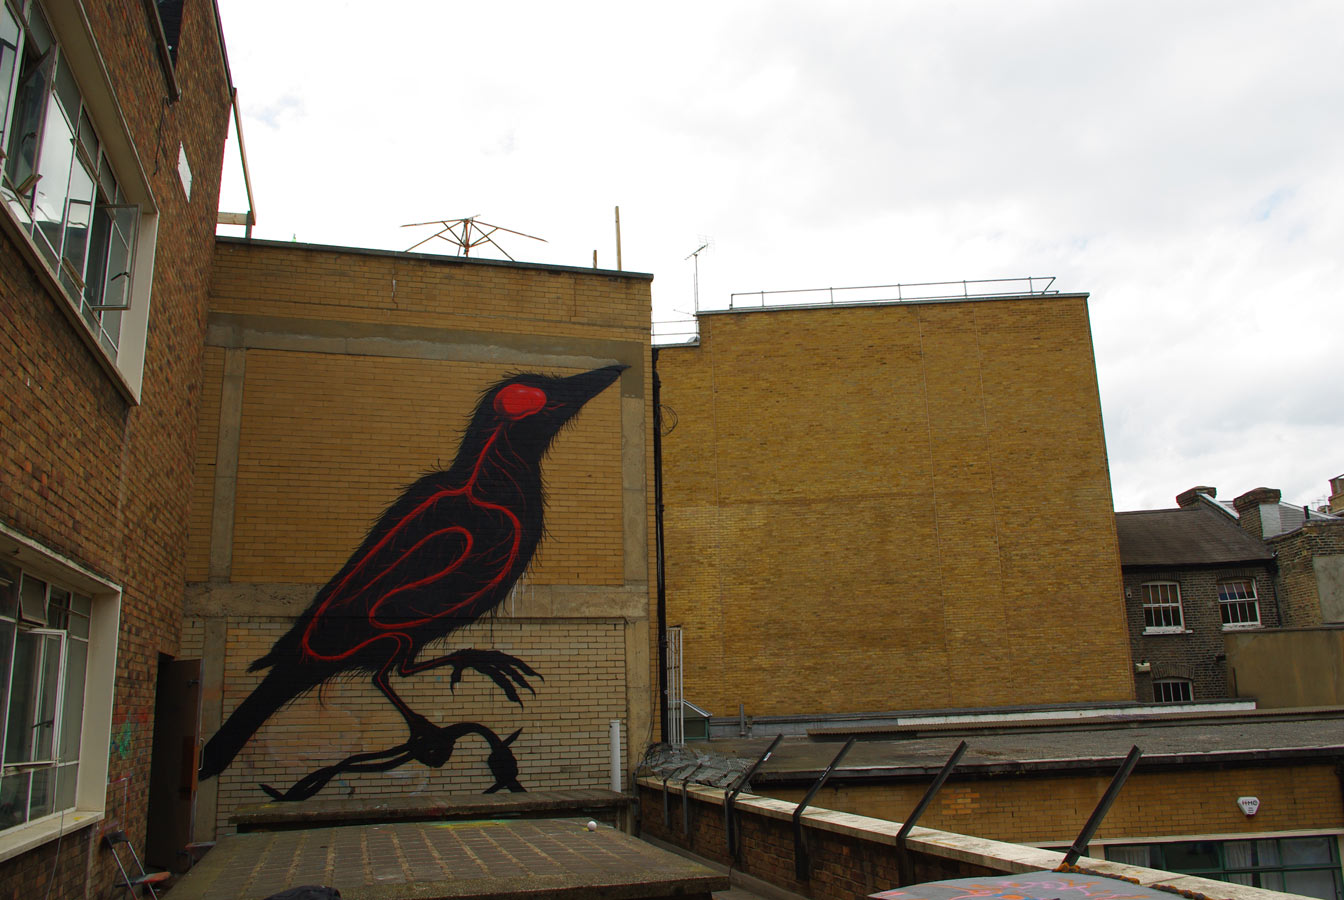  roa rooftop bird london ukingdom